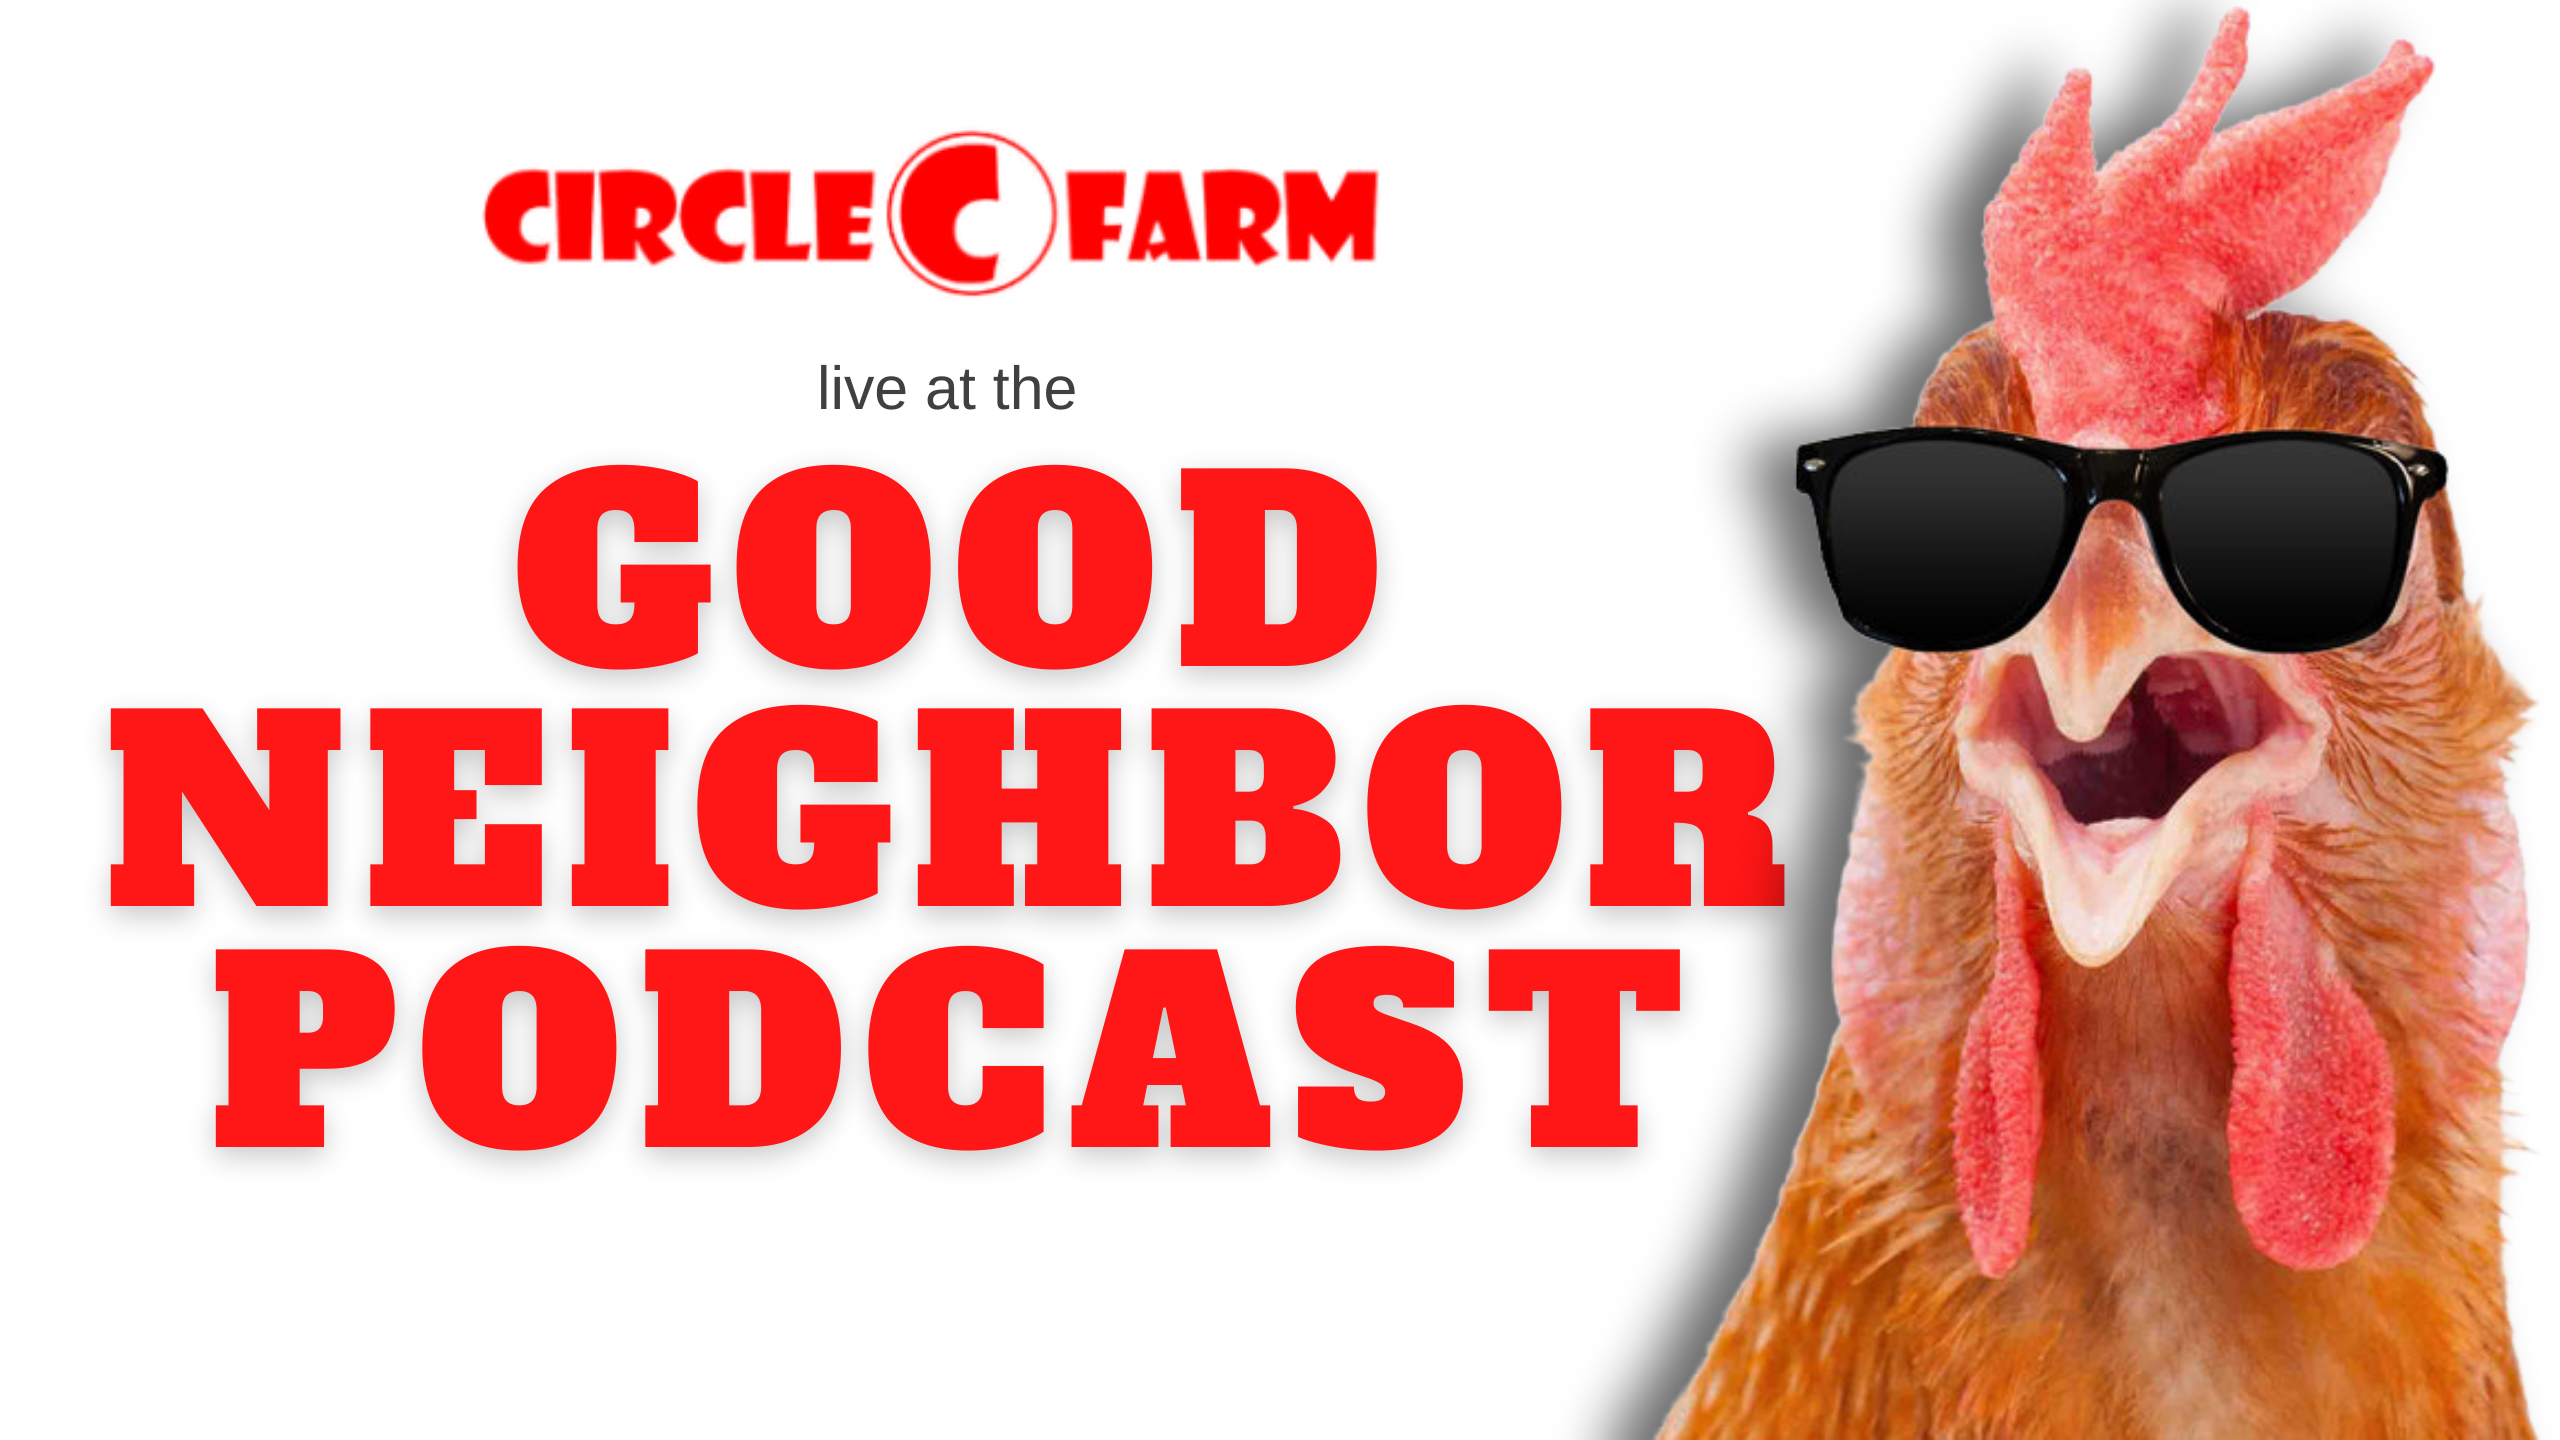 Circle C Farm featured on The Good Neighbor Podcast